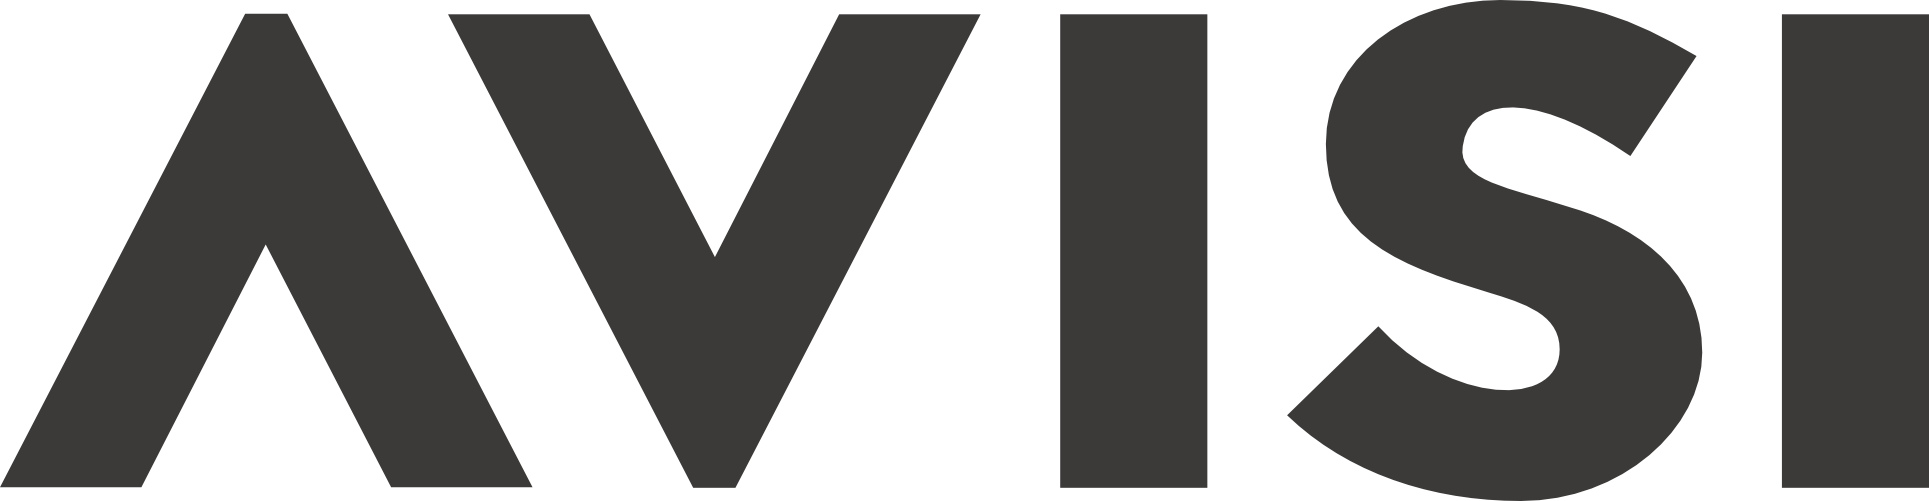 Avisi-logo